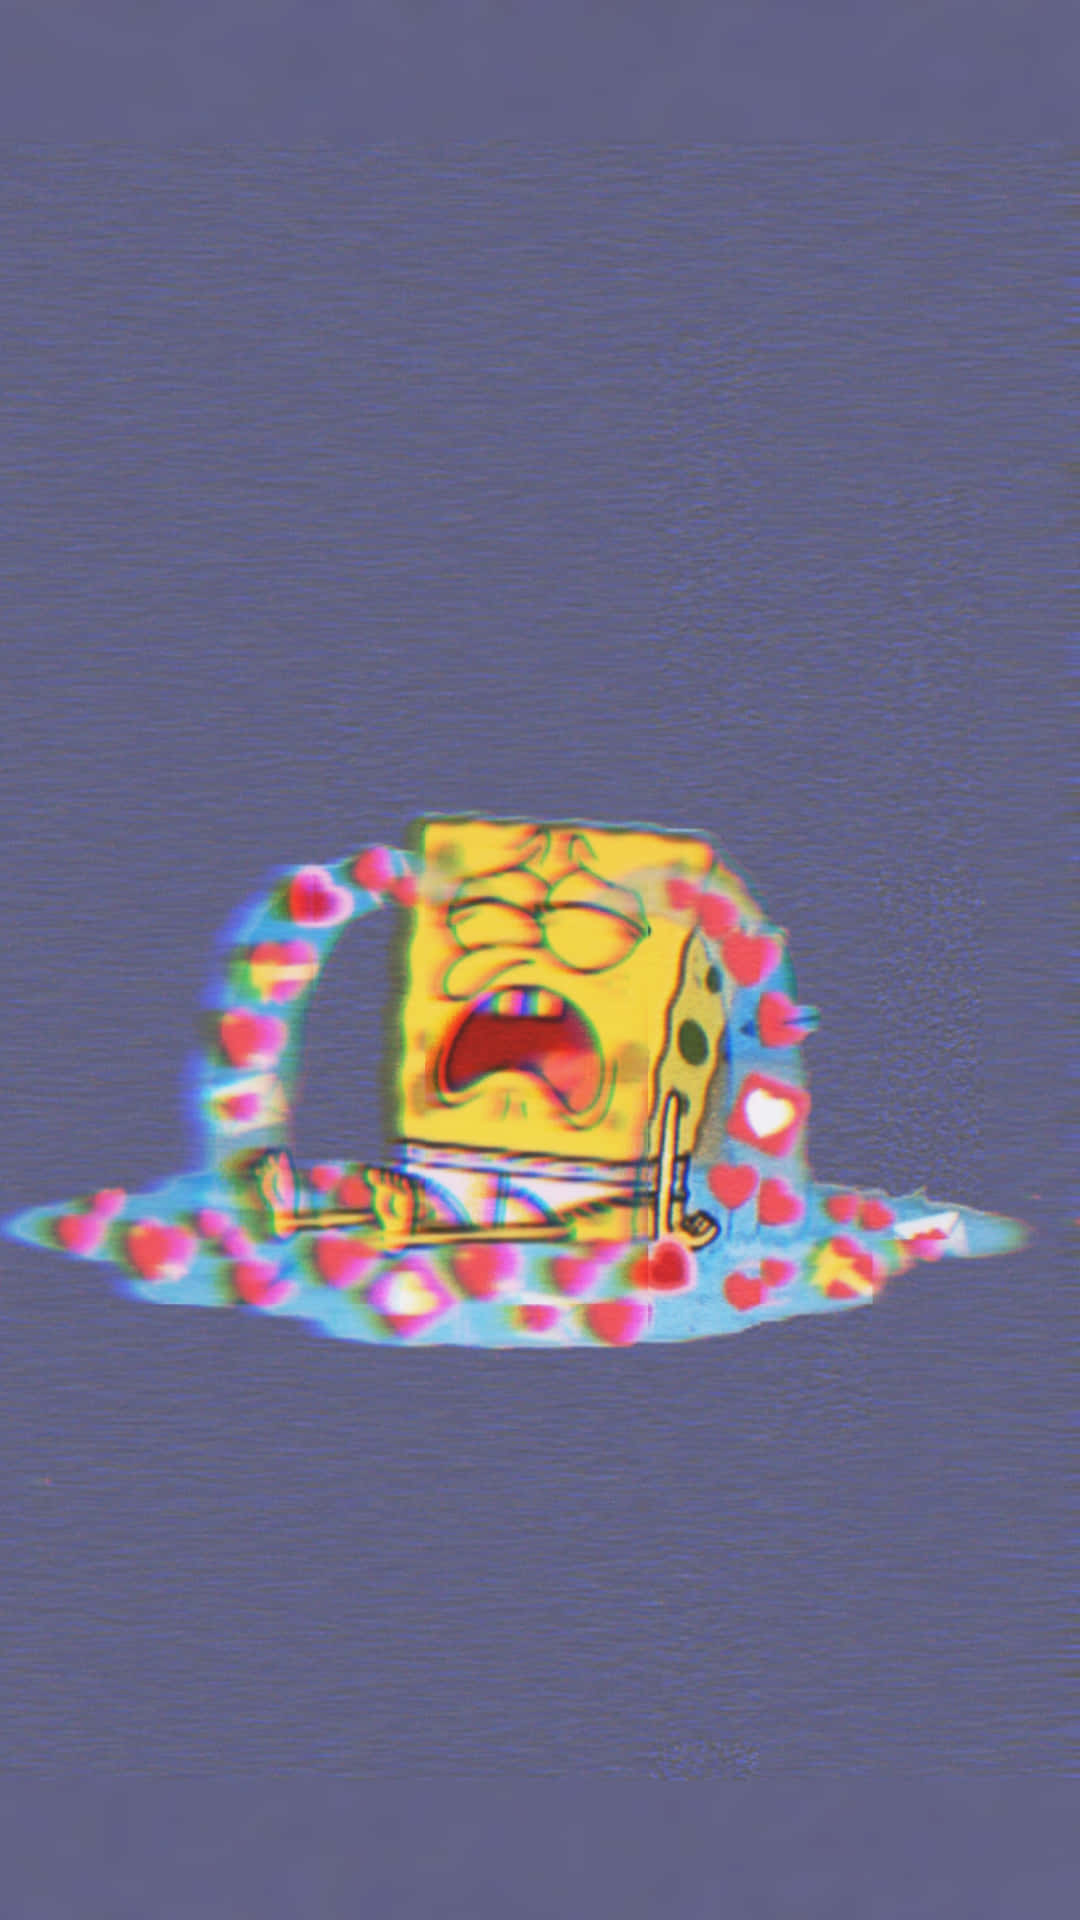 Spongebob Crying Hearts